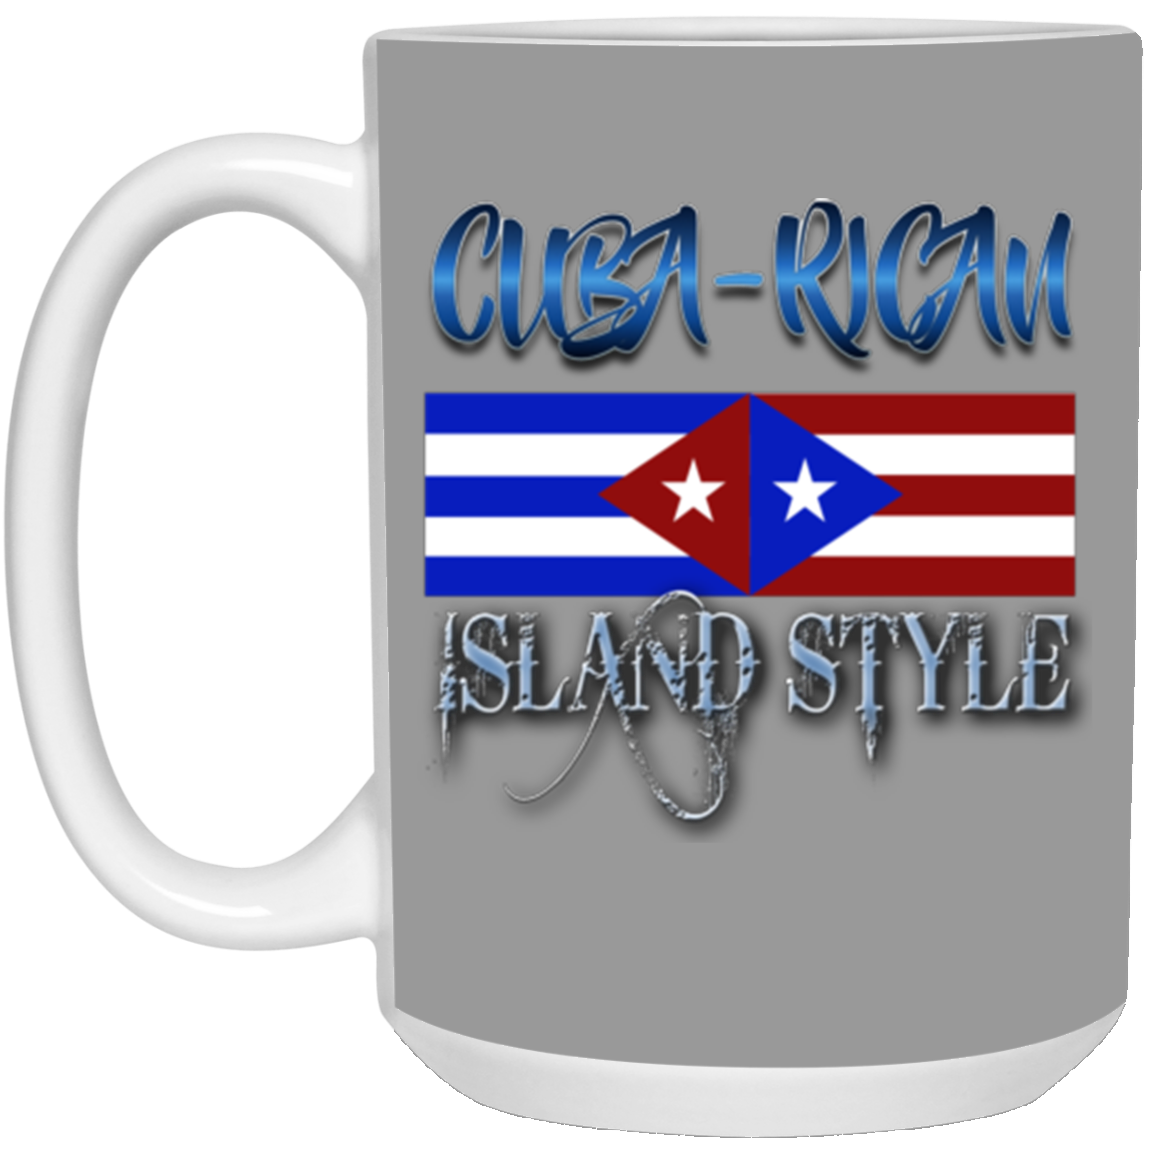 Cuba-Rican 15 oz. White Mug - Puerto Rican Pride